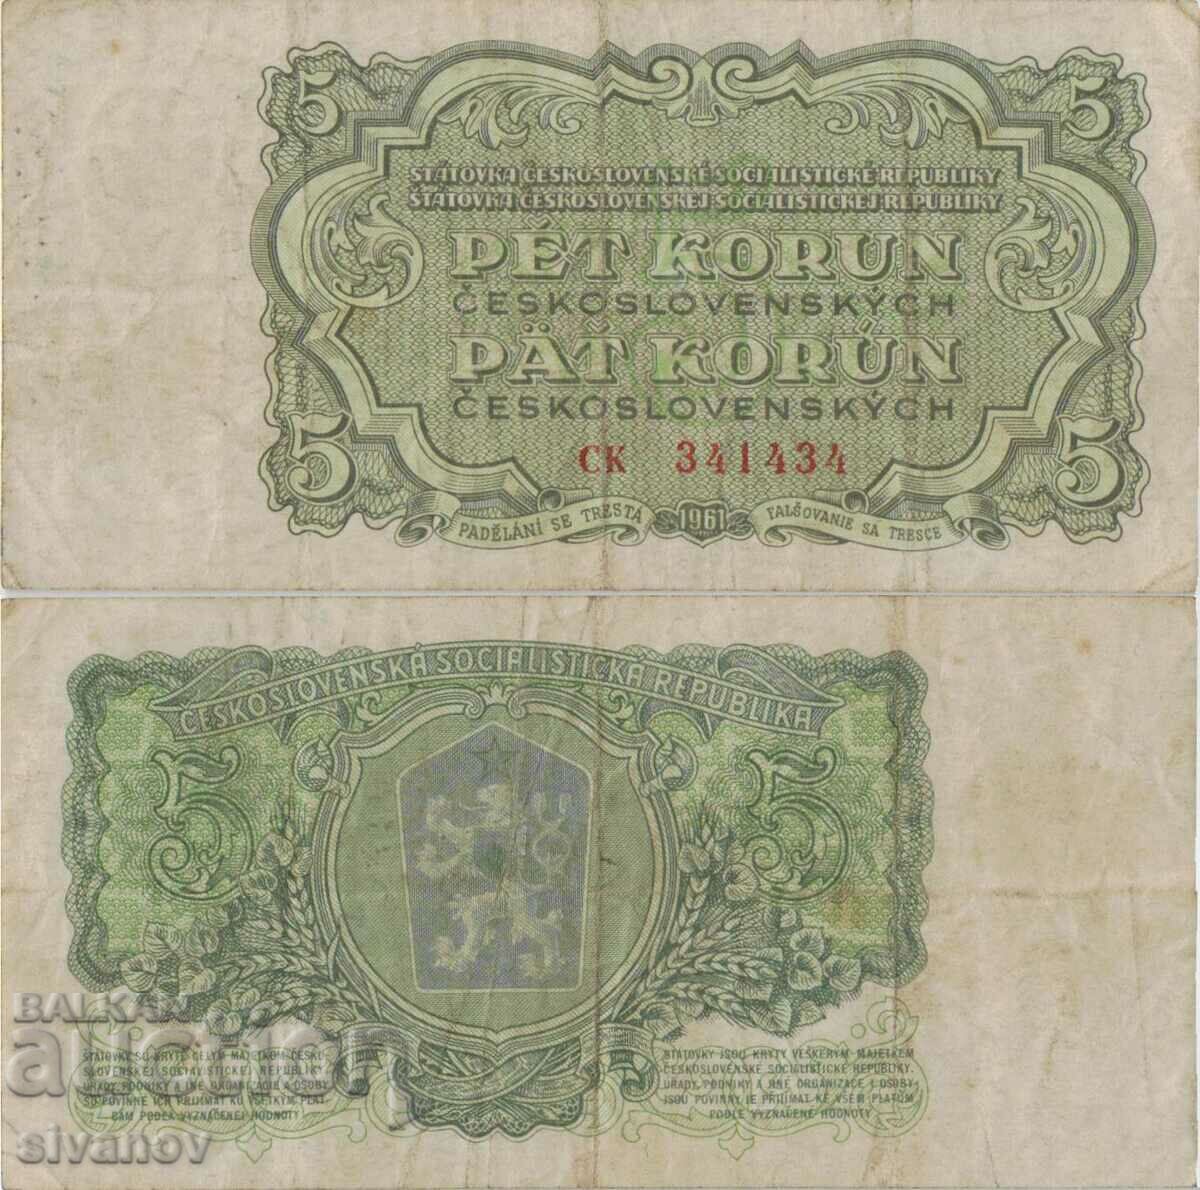 Cehoslovacia 5 coroane 1961 bancnota #5237